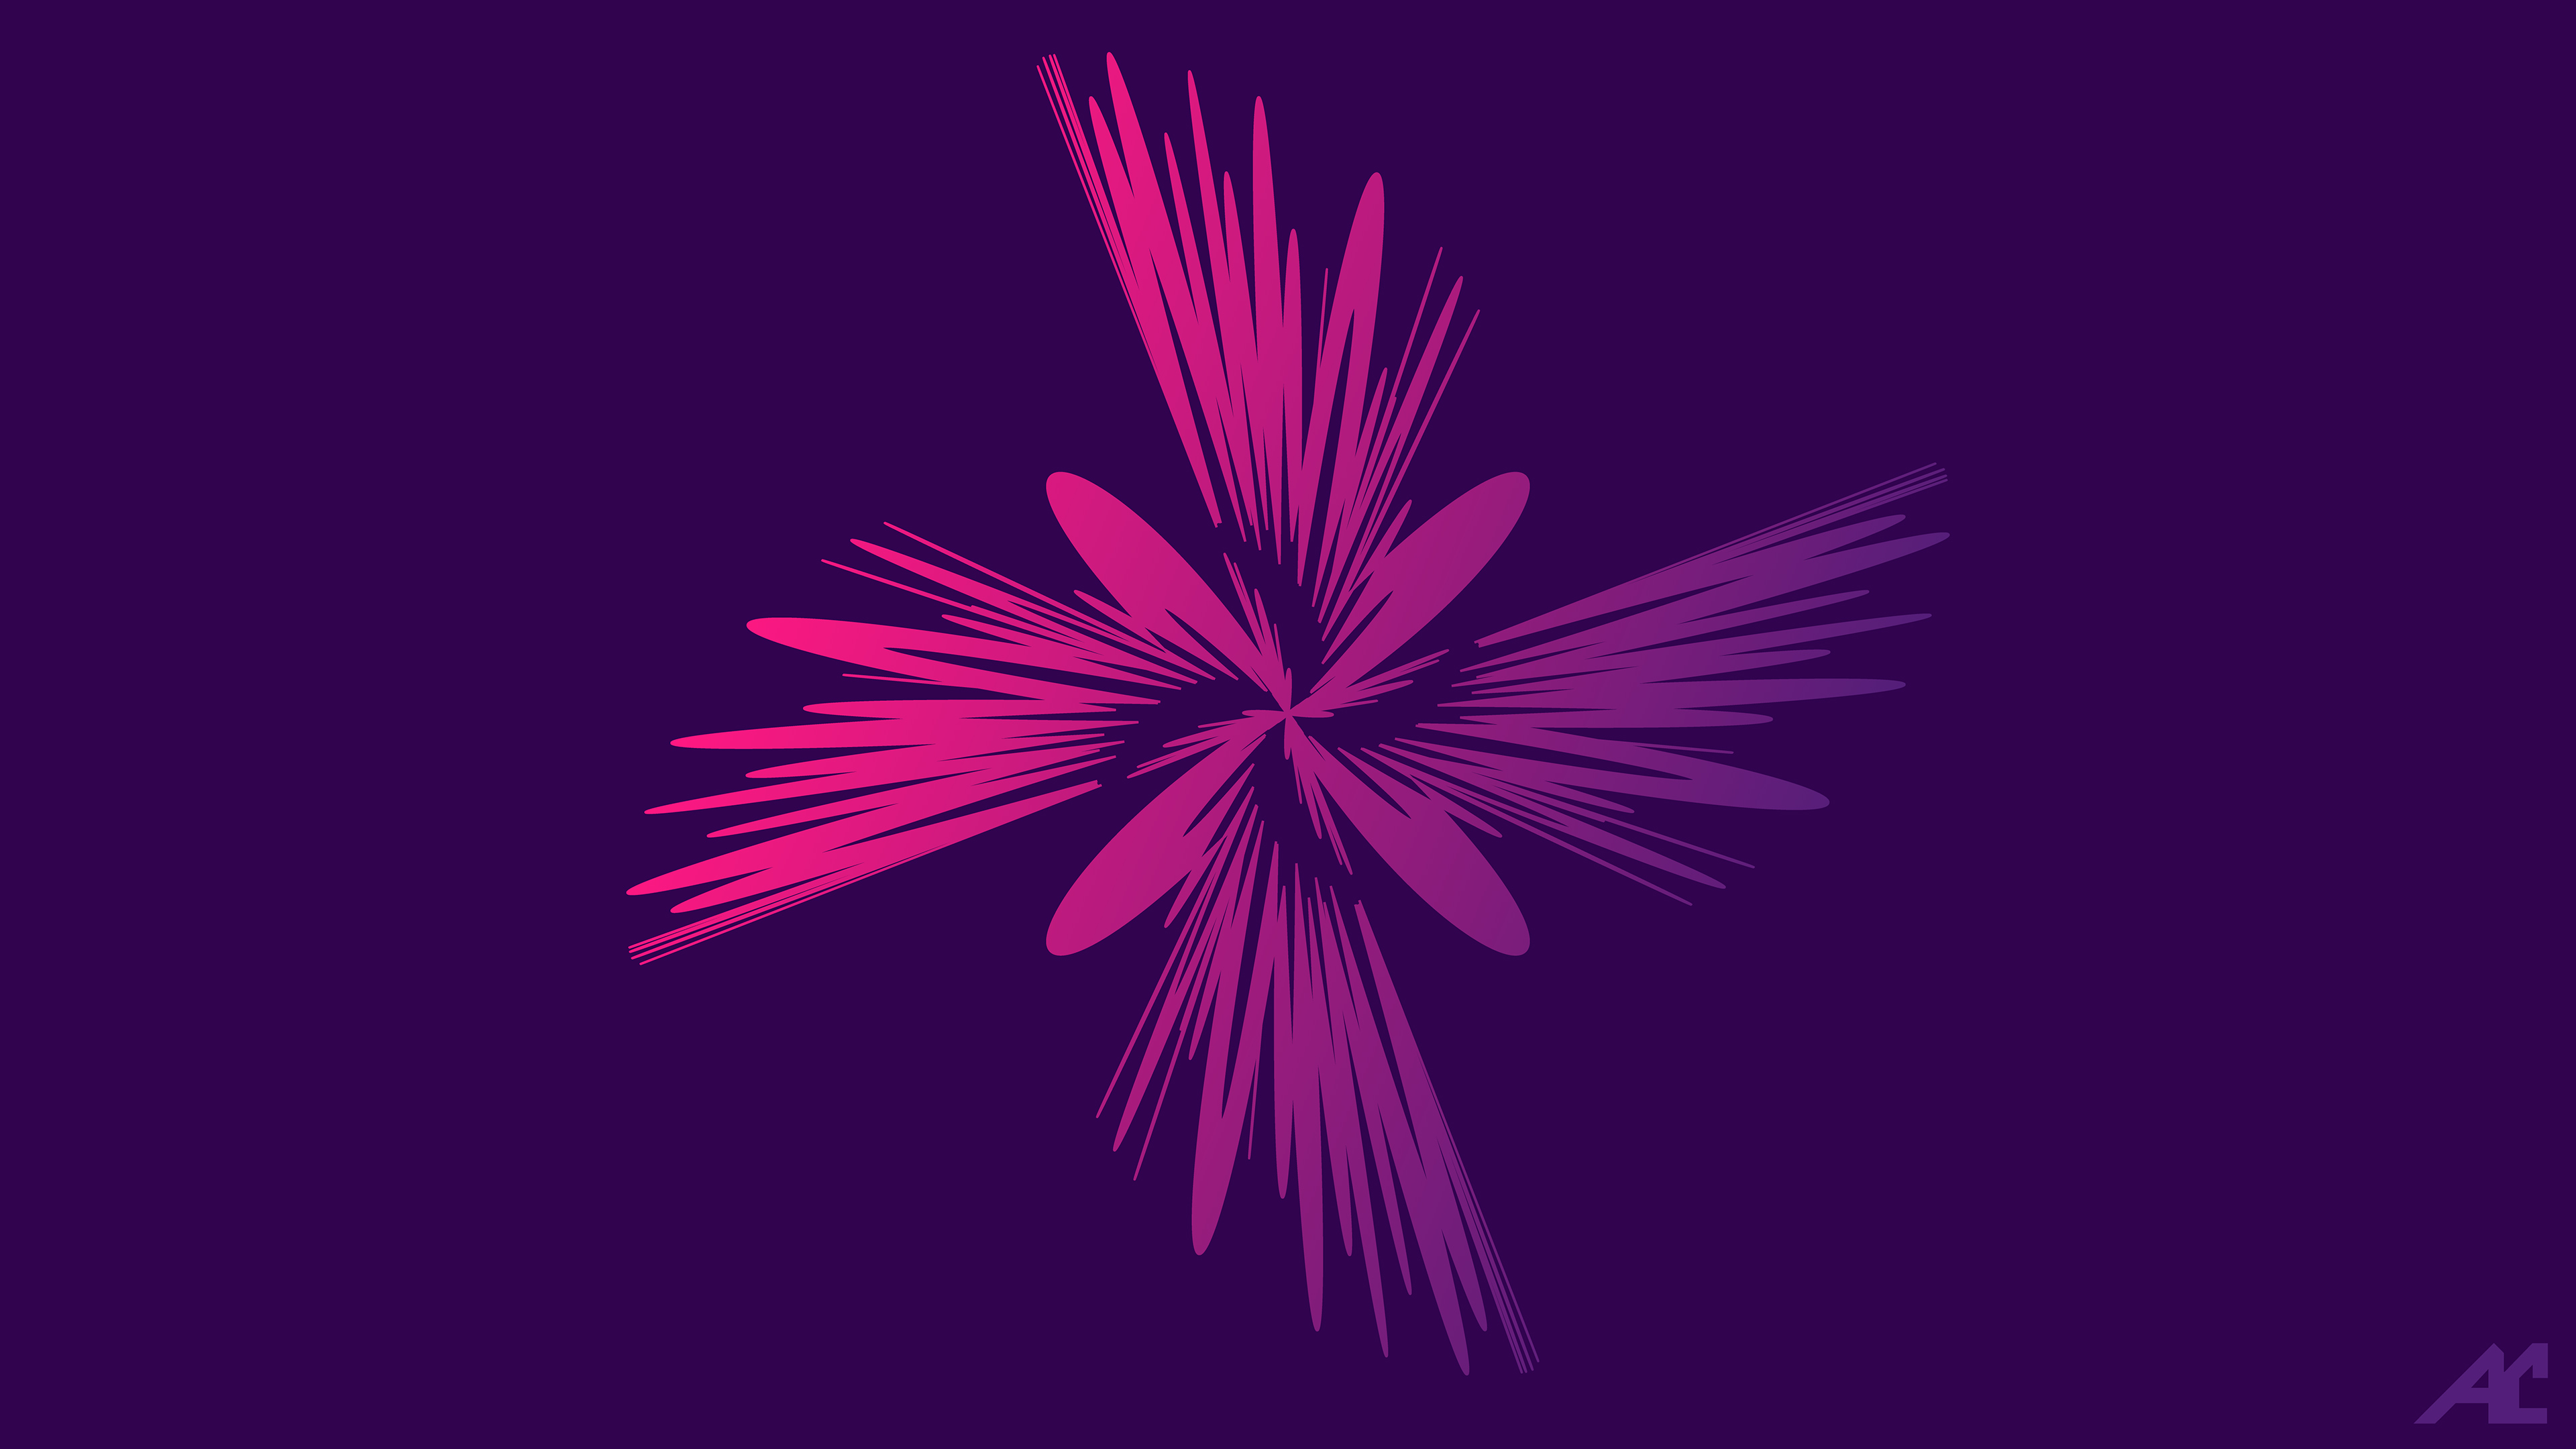 Flower Abstract 4k, HD Artist, 4k